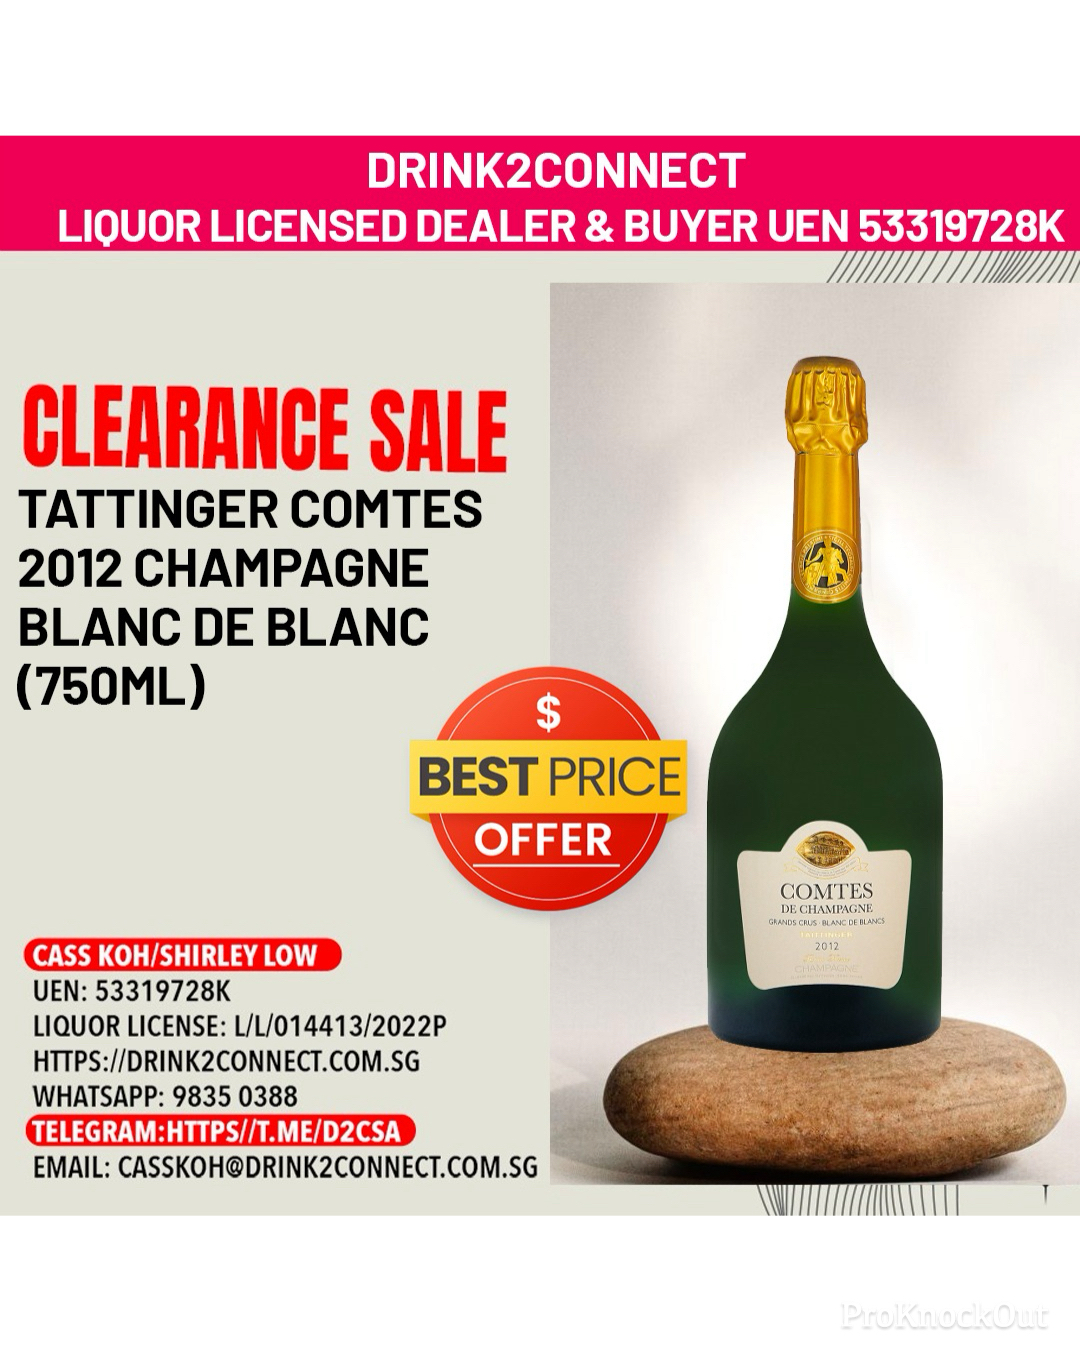 750ml Tattinger Comtes 2012 Champagne Blanc de Blanc 2012 Champagne, Tattinger Champagne Online